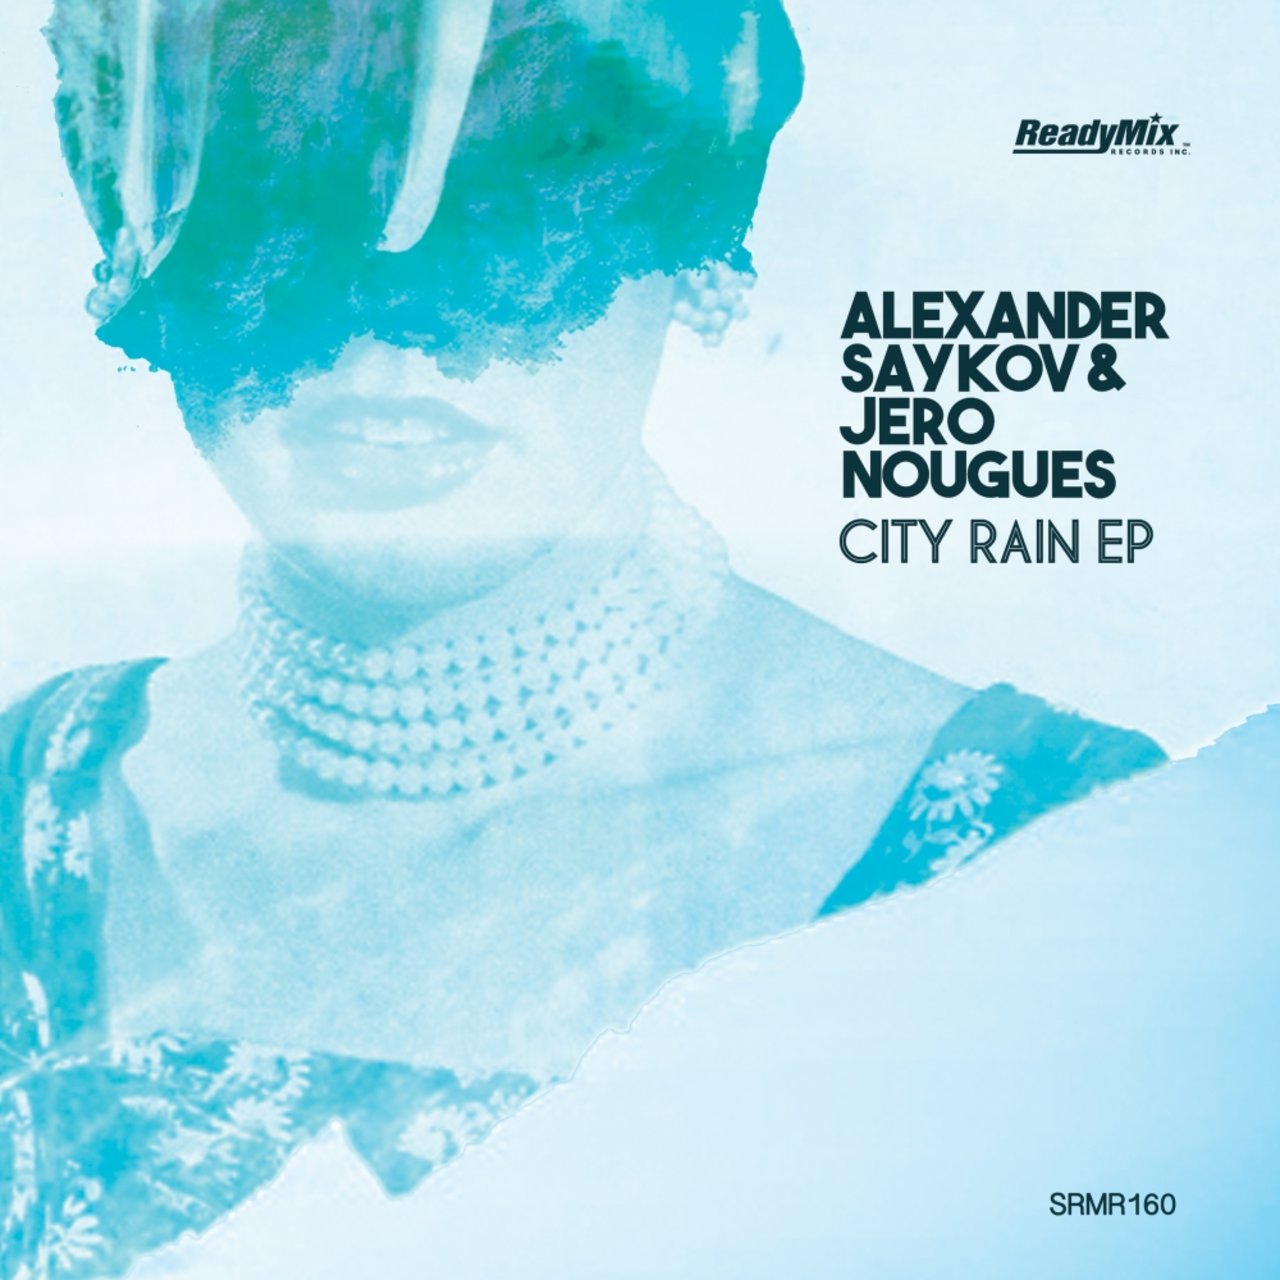 Alexander Saykov & Jero Nougues - City Rain EP / Ready Mix Records